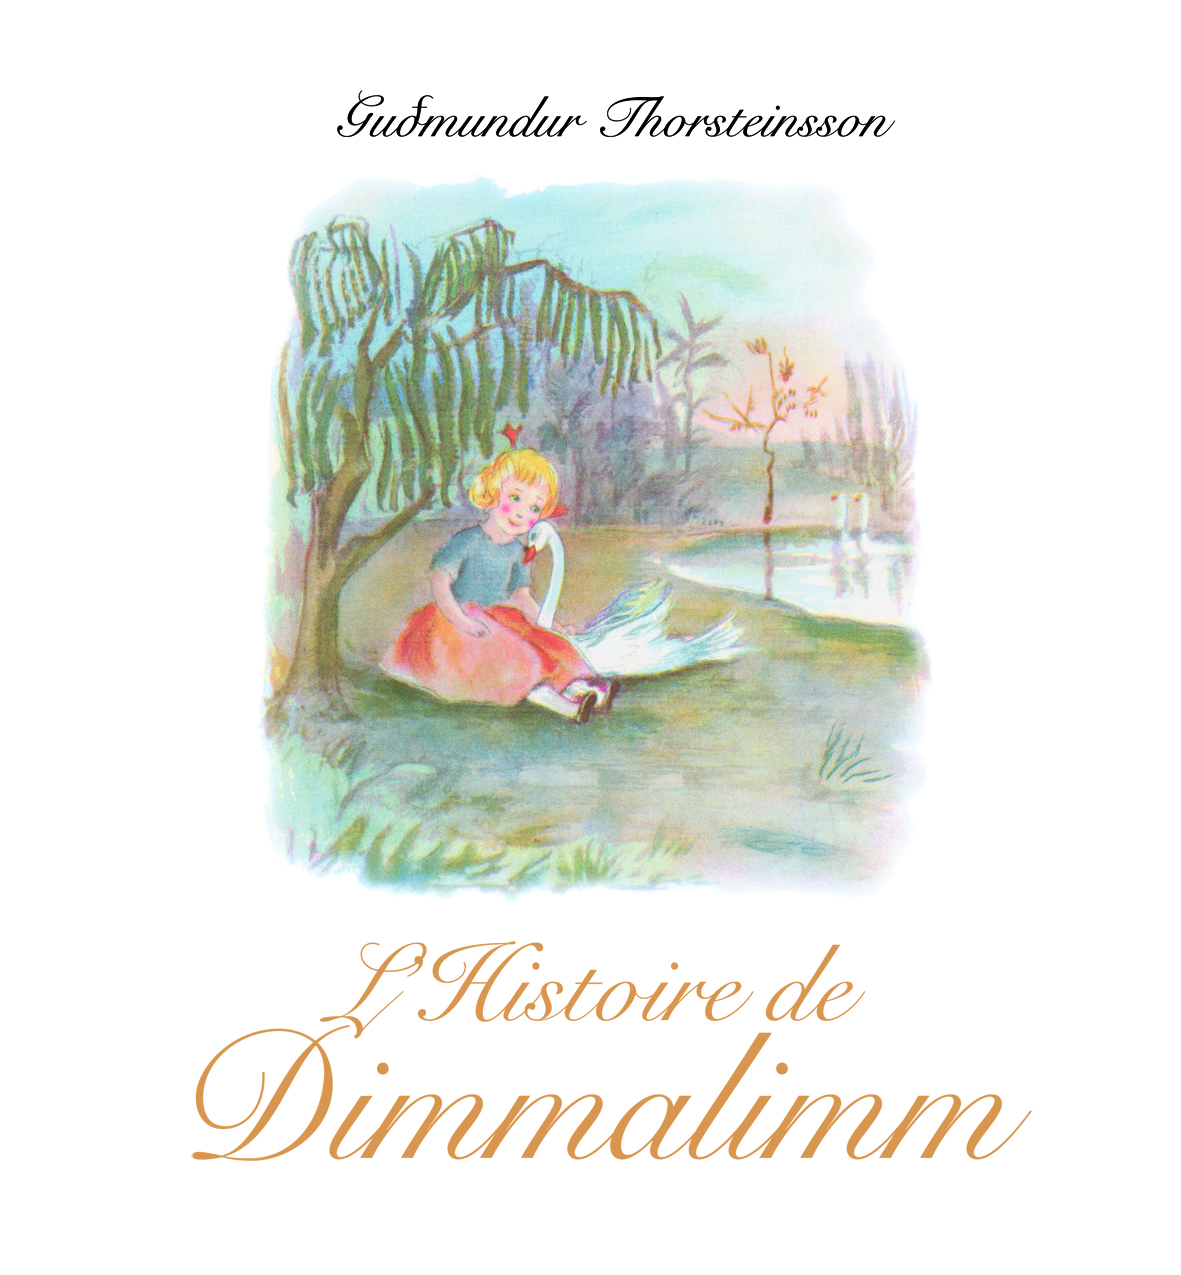 L'Histoire de Dimmalimm